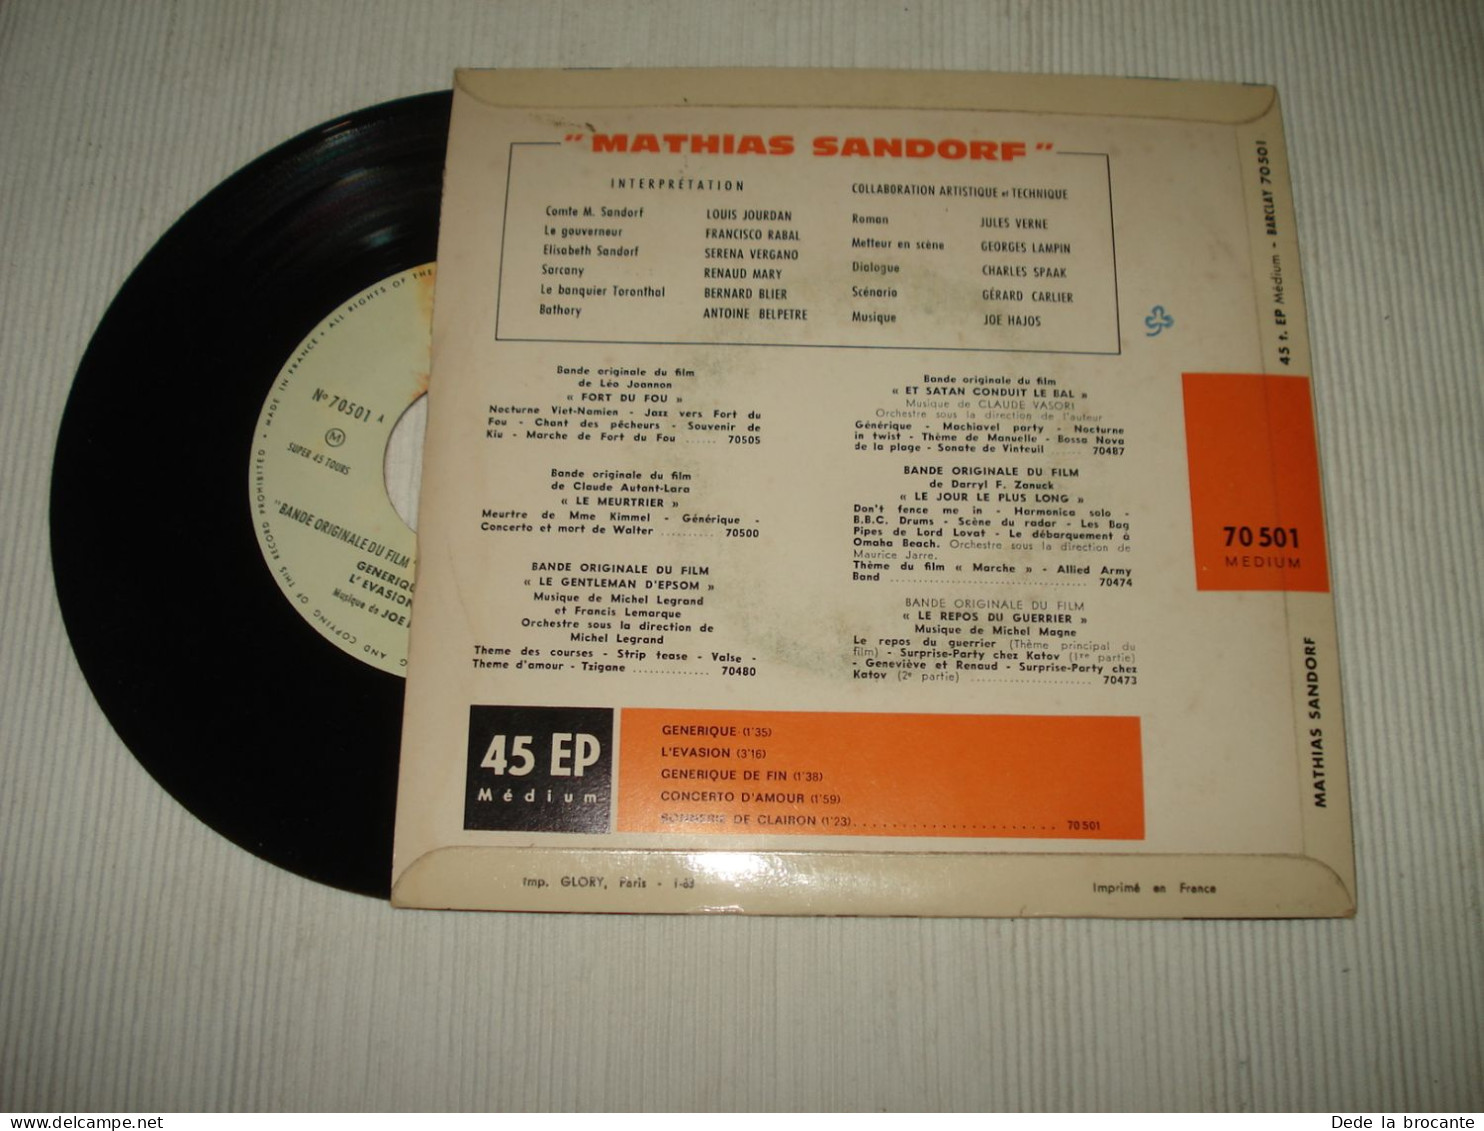 B14 / Joe Hajos – Mathias Sandorf - EP - 7" + Languette  70 501 - Fr 1963  EX/EX - Soundtracks, Film Music